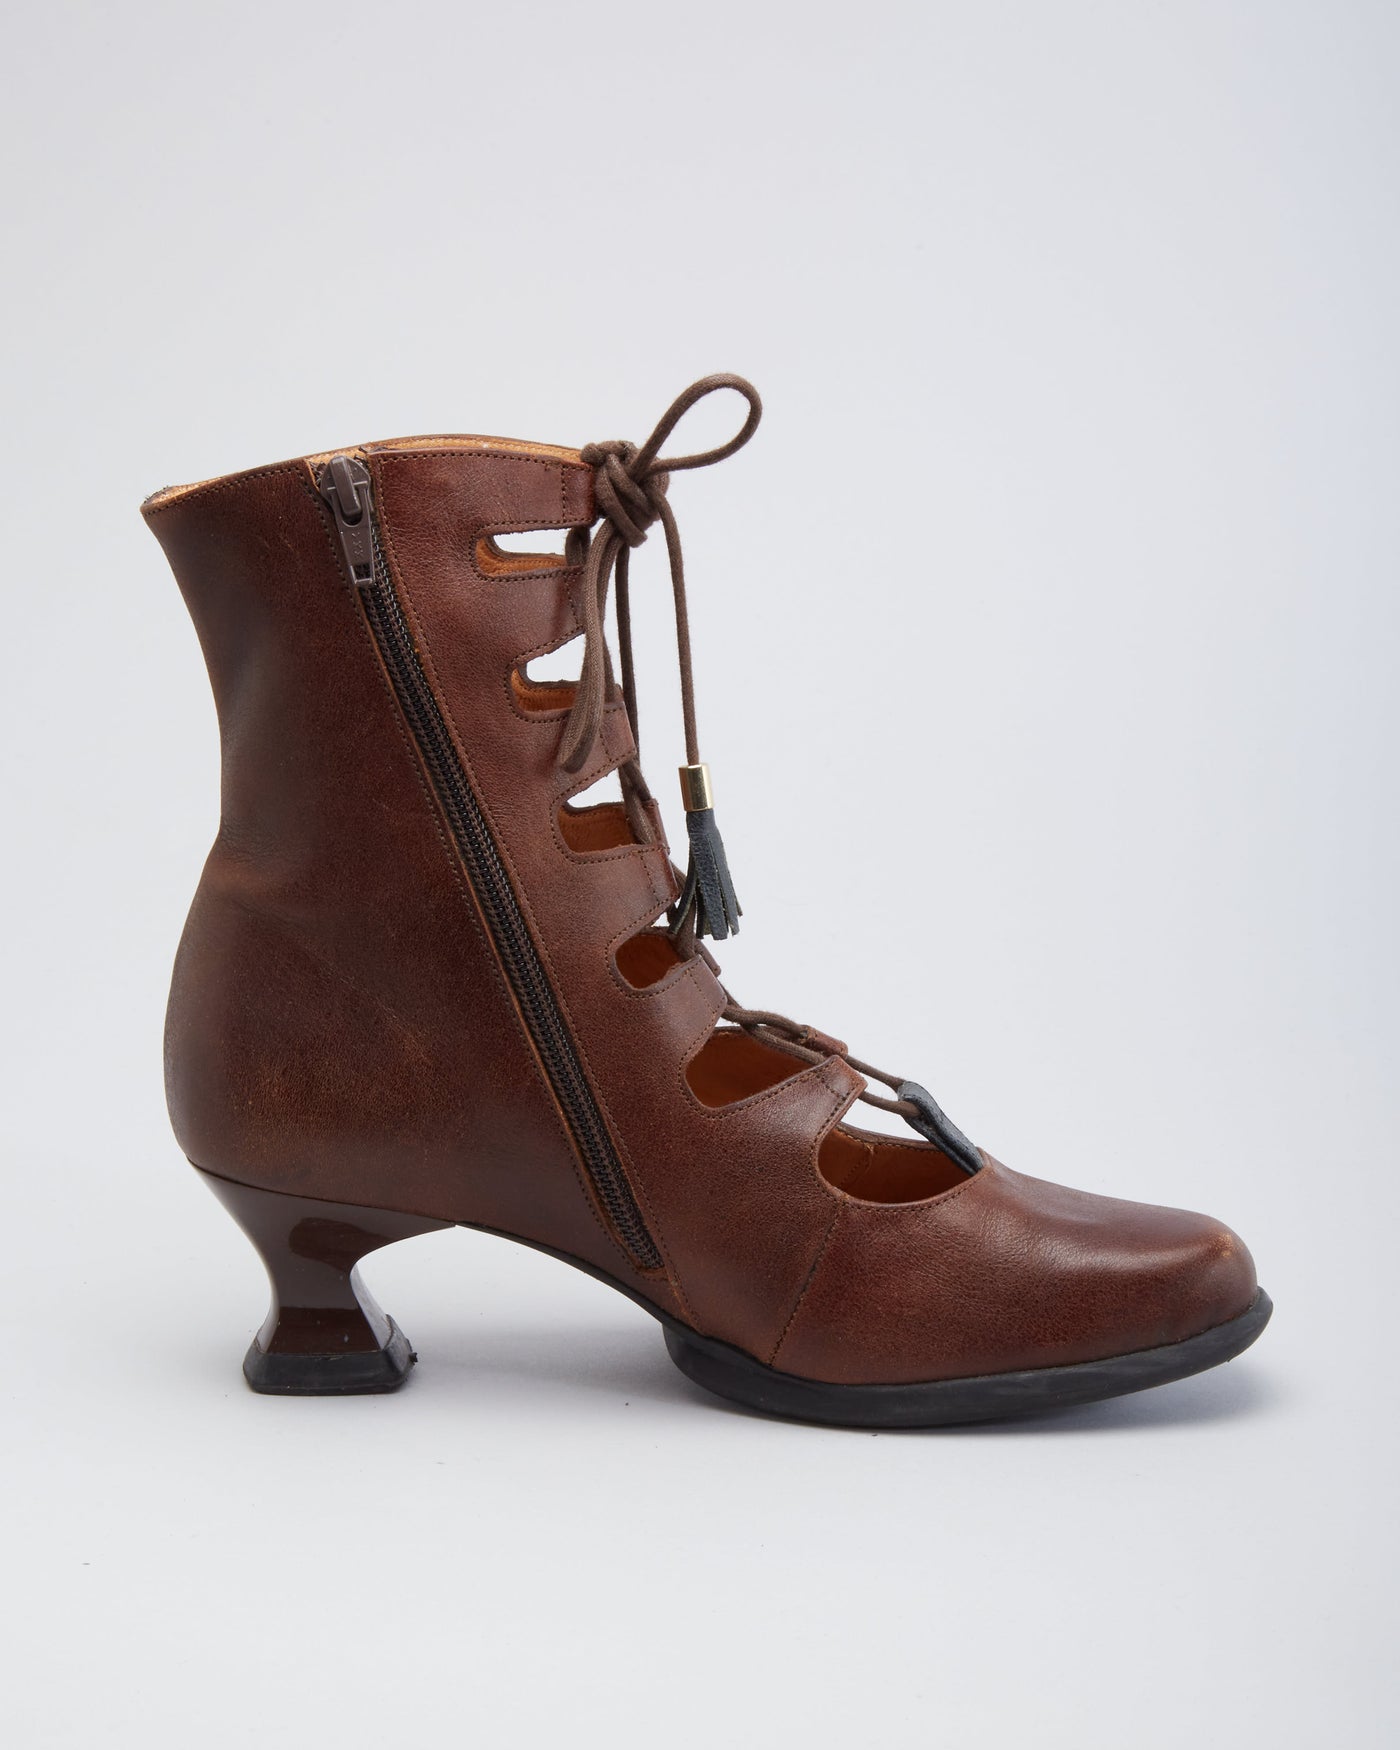 Vintage lace up Victorian Heel Boots - UK 5.5